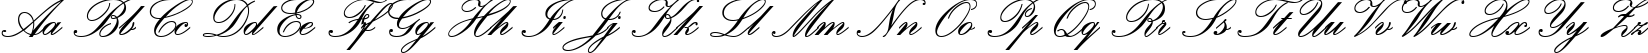 Пример написания английского алфавита шрифтом Palace Script MT Semi Bold